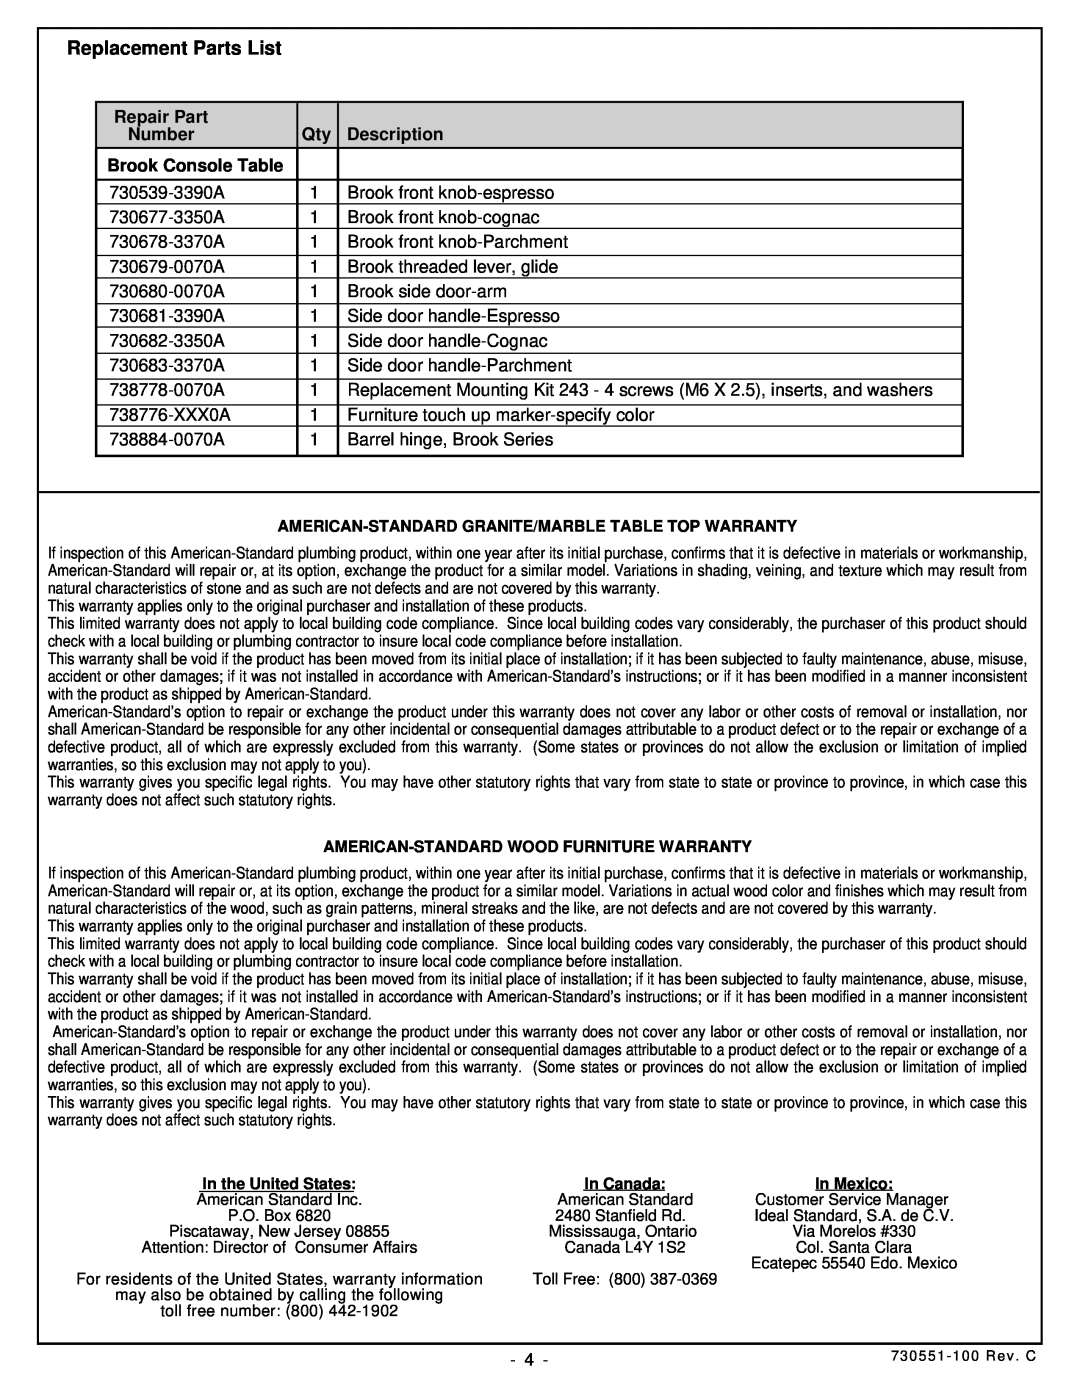 American Standard 9373.100 Replacement Parts List, Repair Part, Number, Description, Brook Console Table 